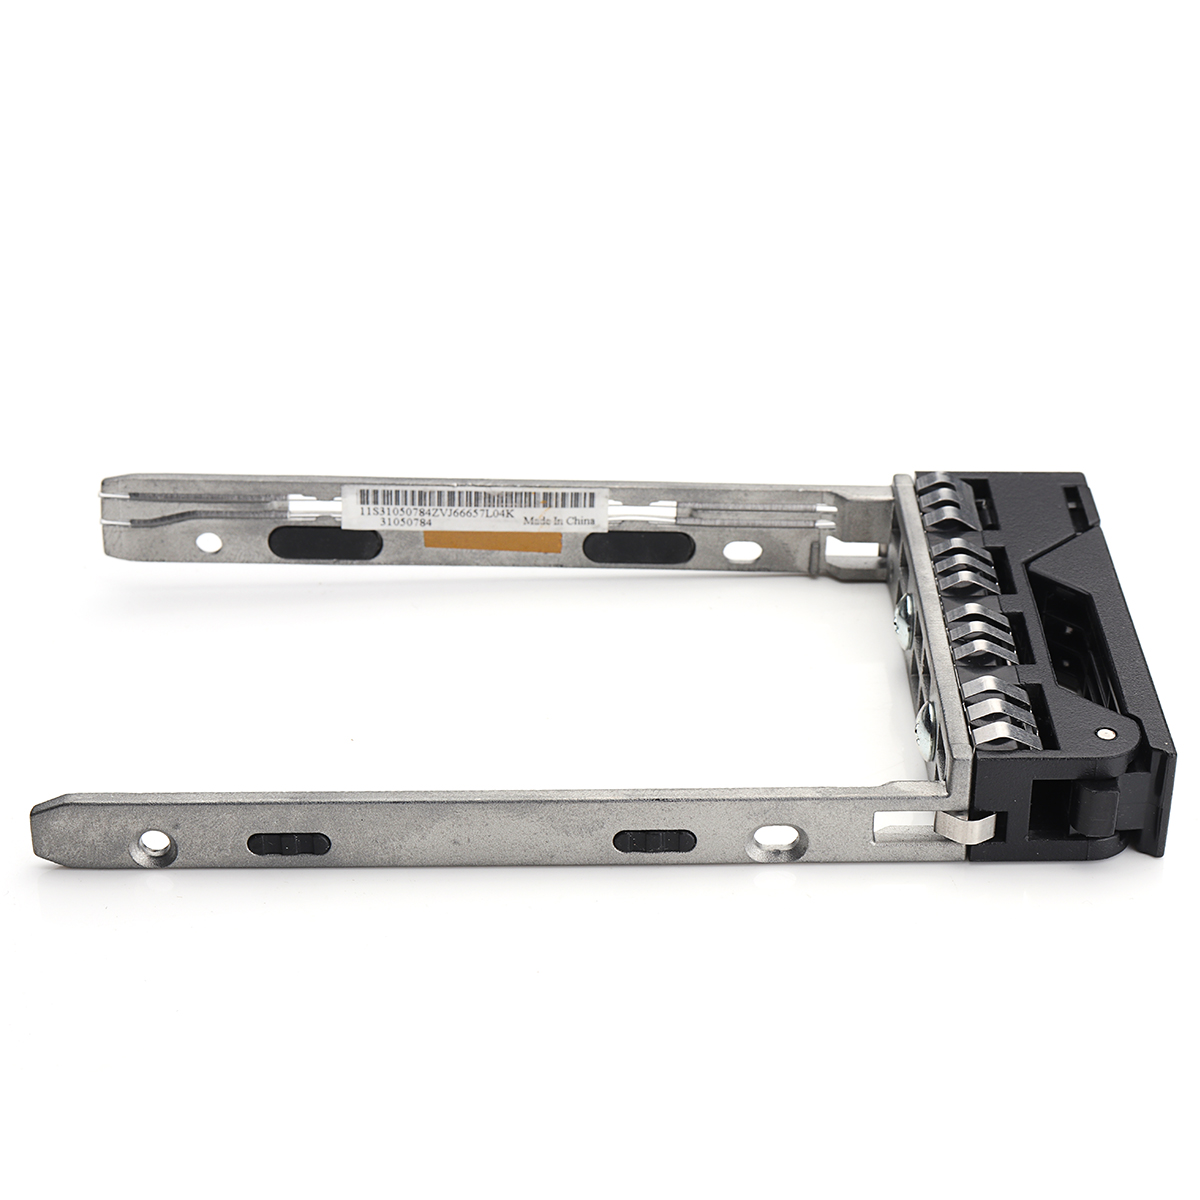 25inch-Hard-Drive-Tray-Caddy-SSD-HDD-Bracket-Rack-for-Lenovo-RD330-1912884-5